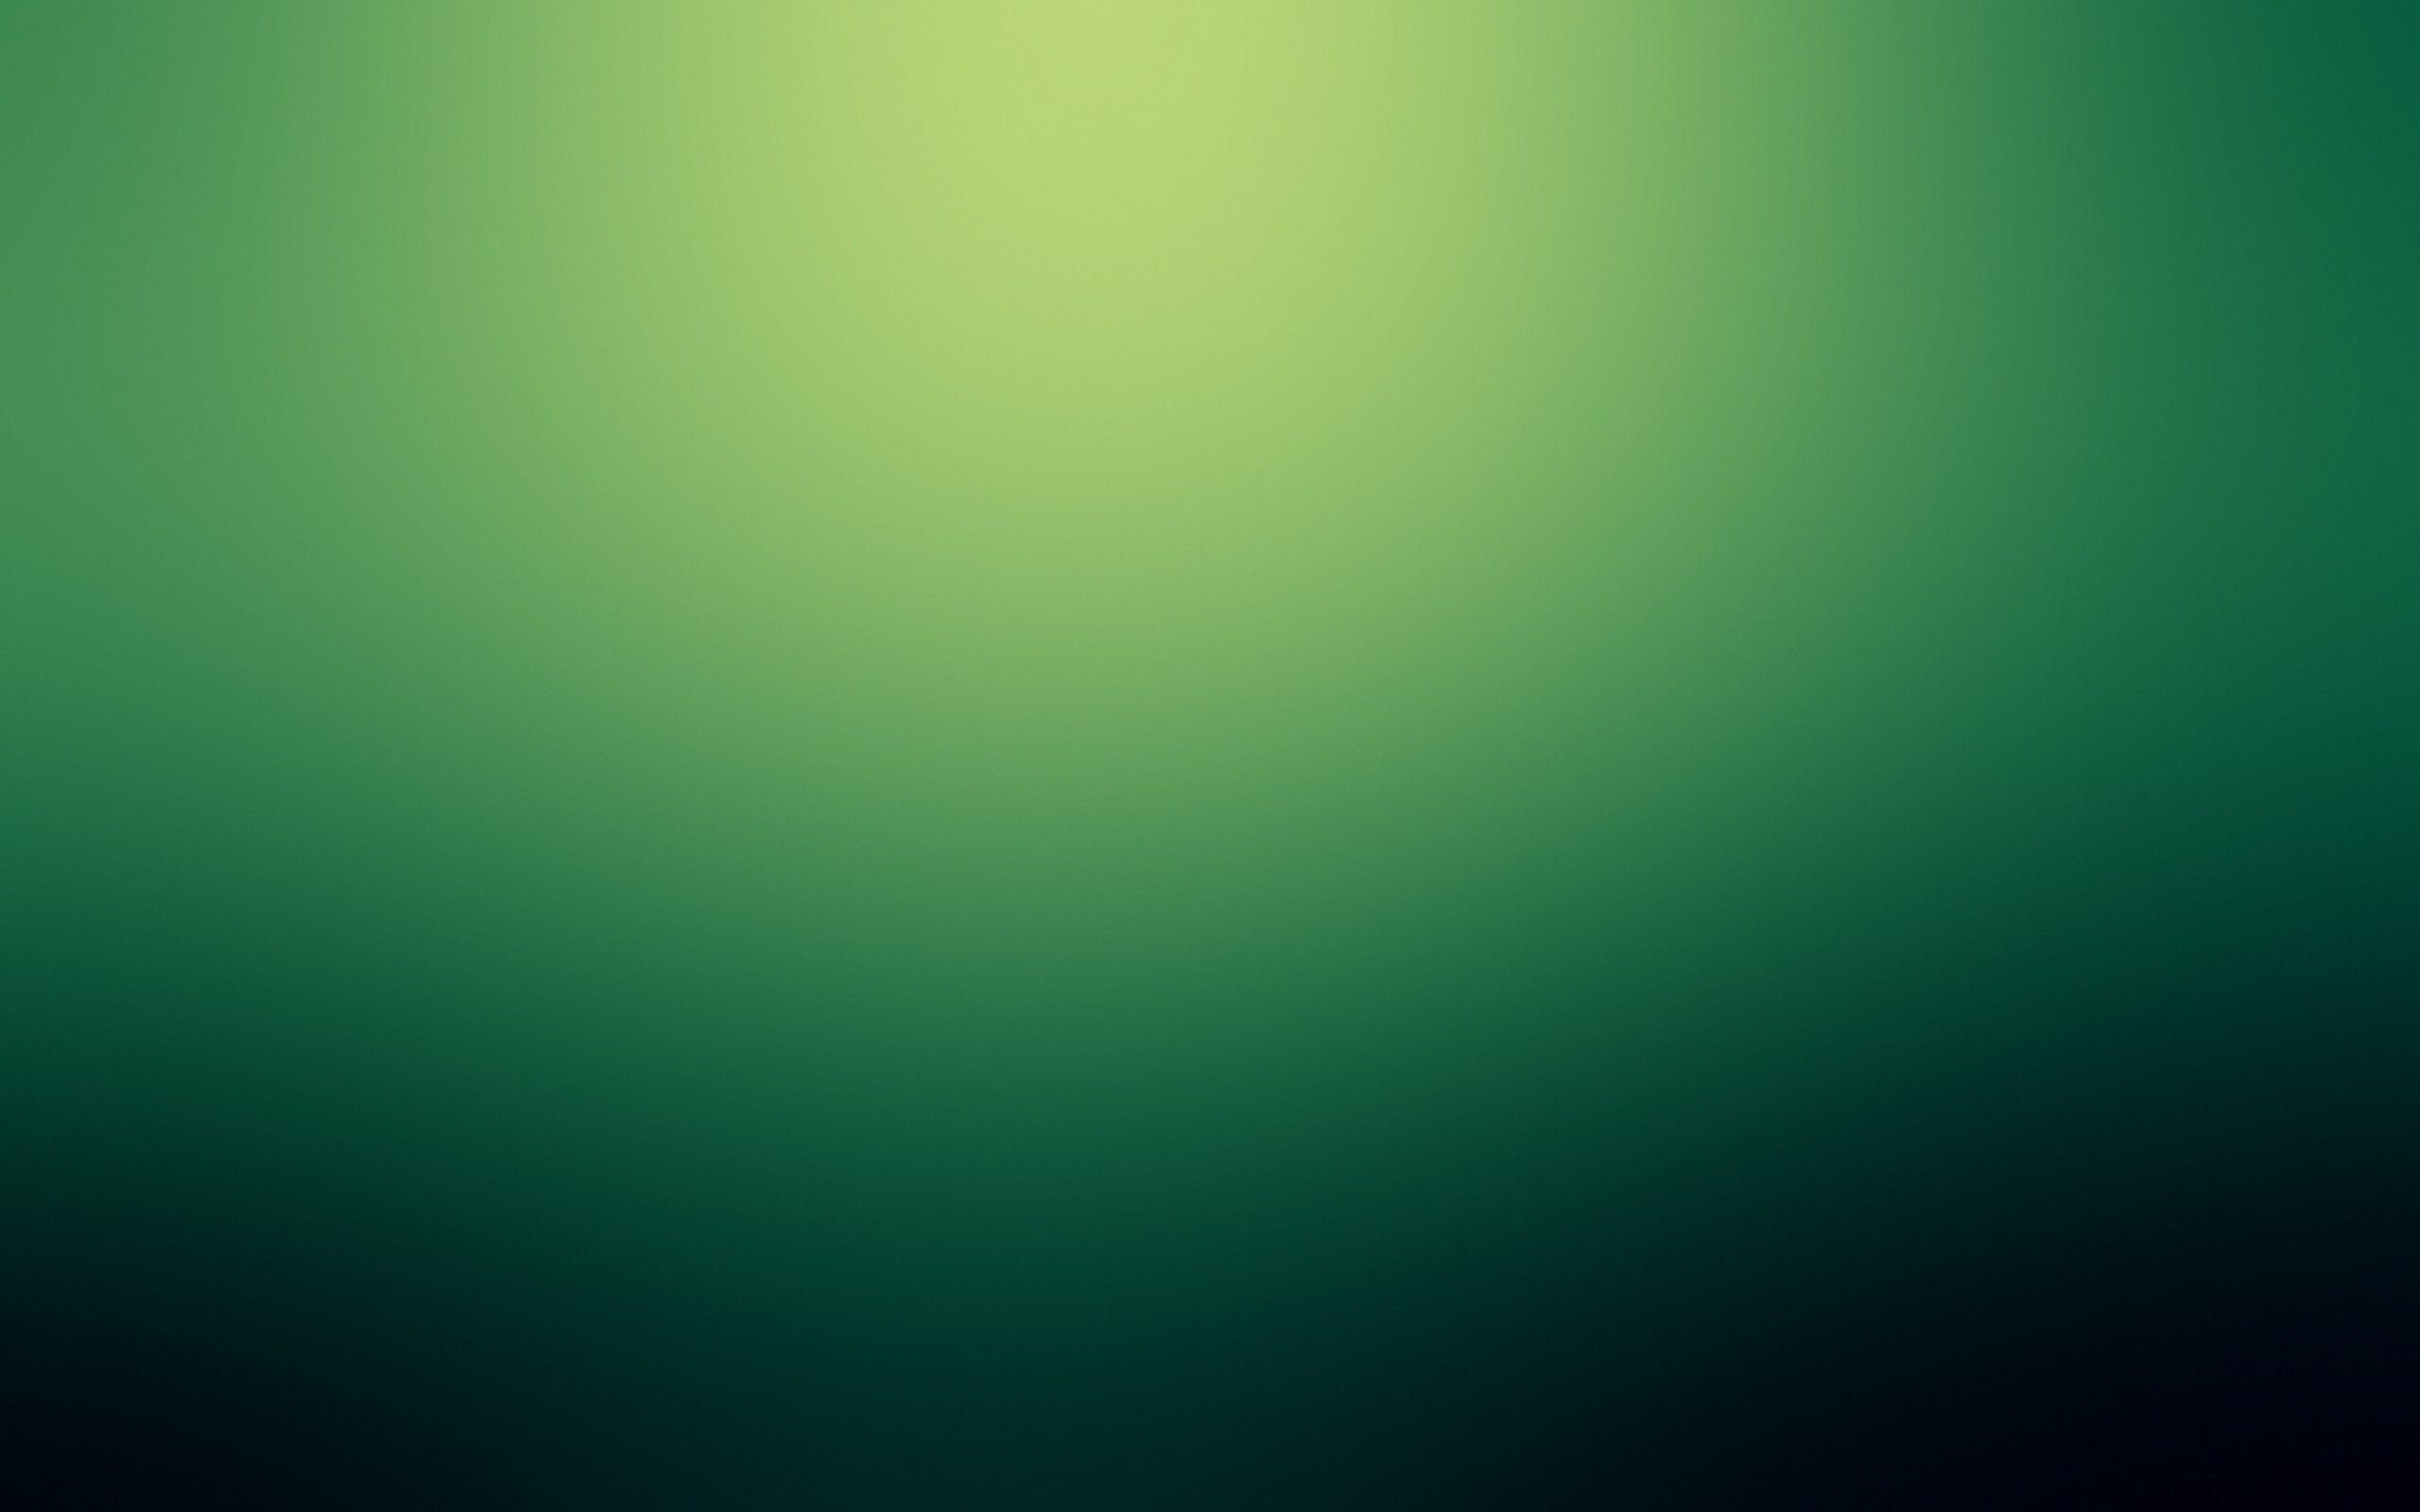 Green Gradient Background wallpaper. Green Gradient Background